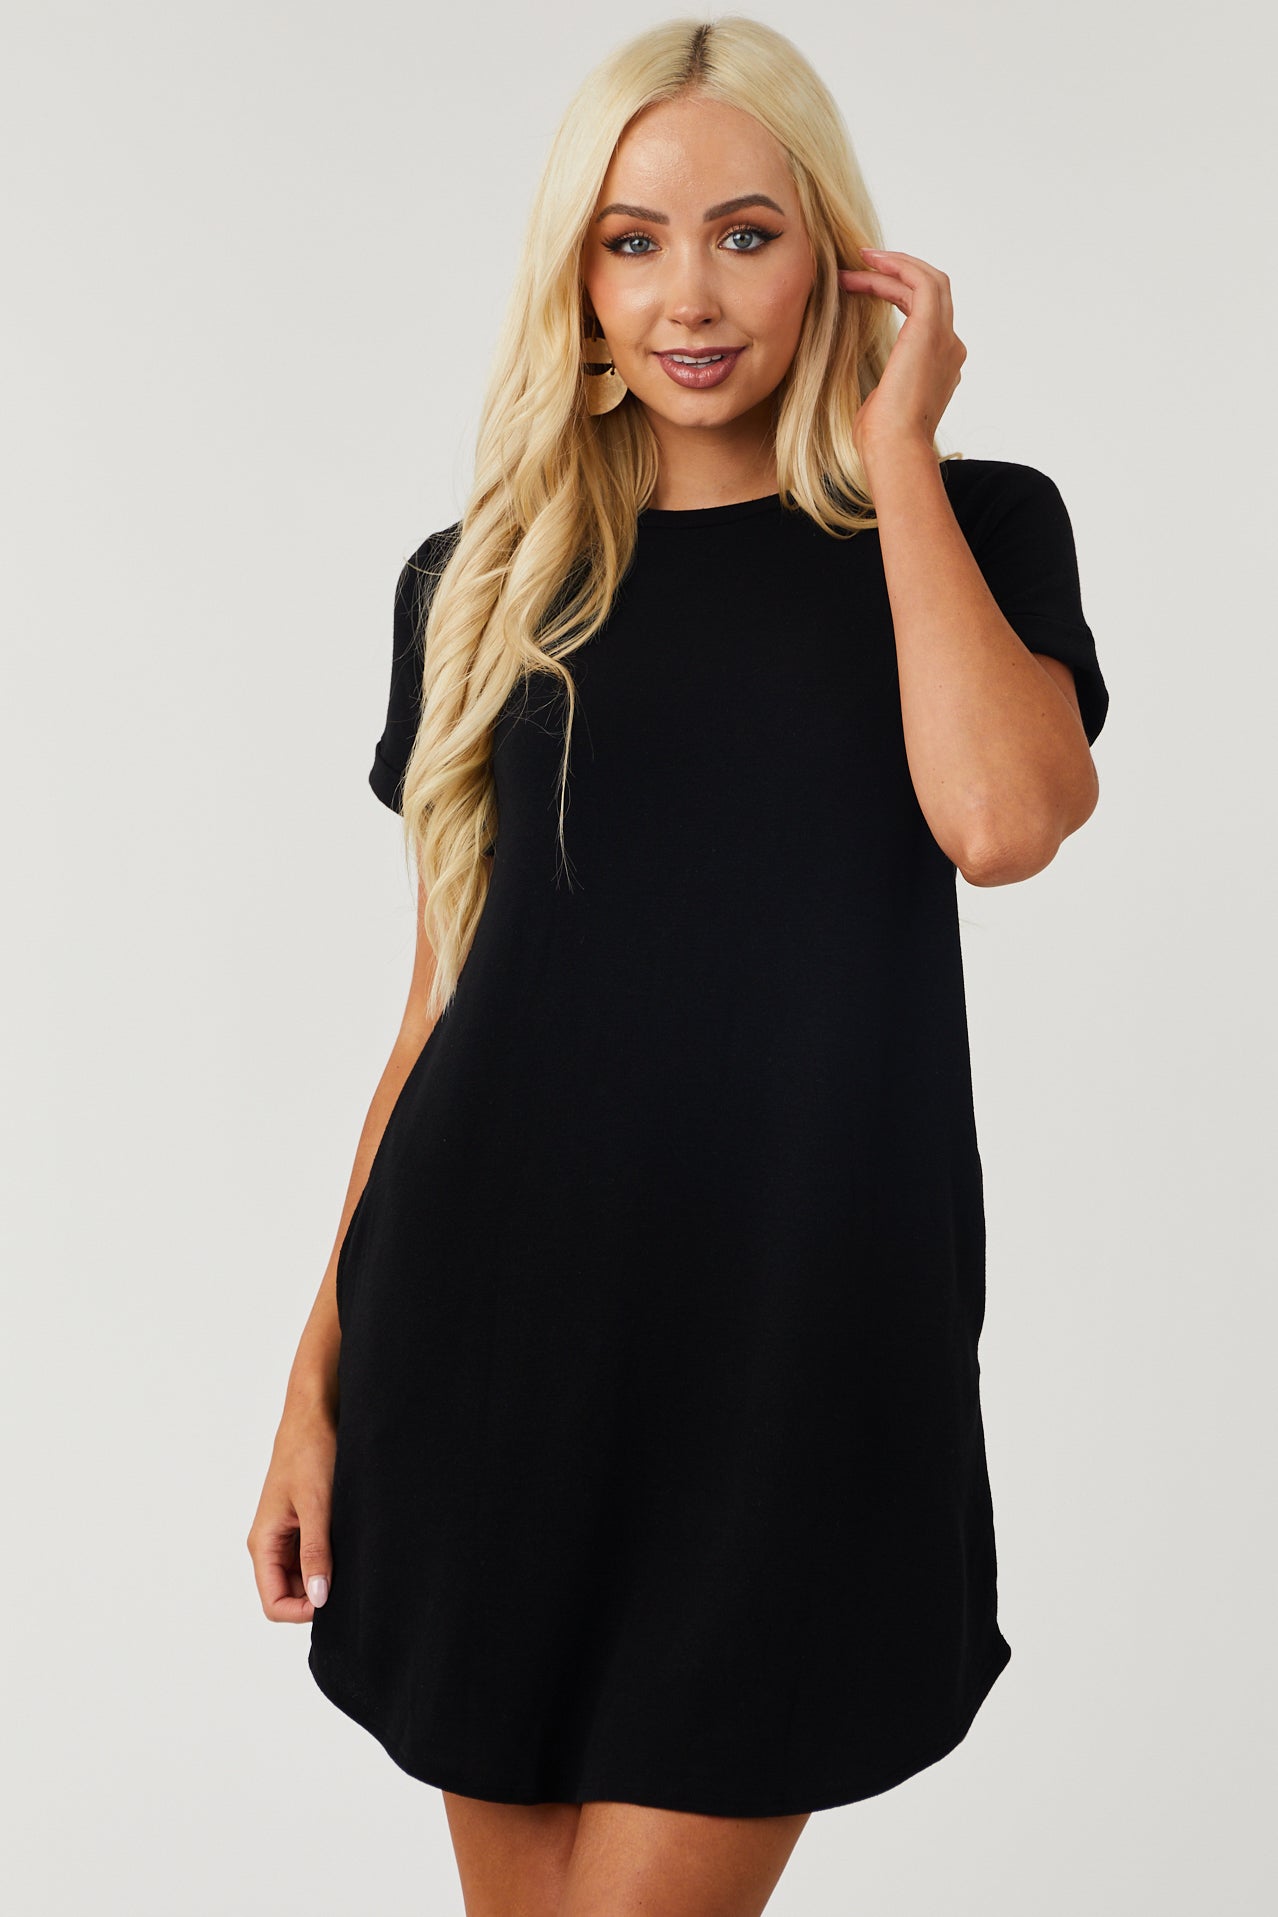 Black Short Sleeve Tee Shirt Mini Dress